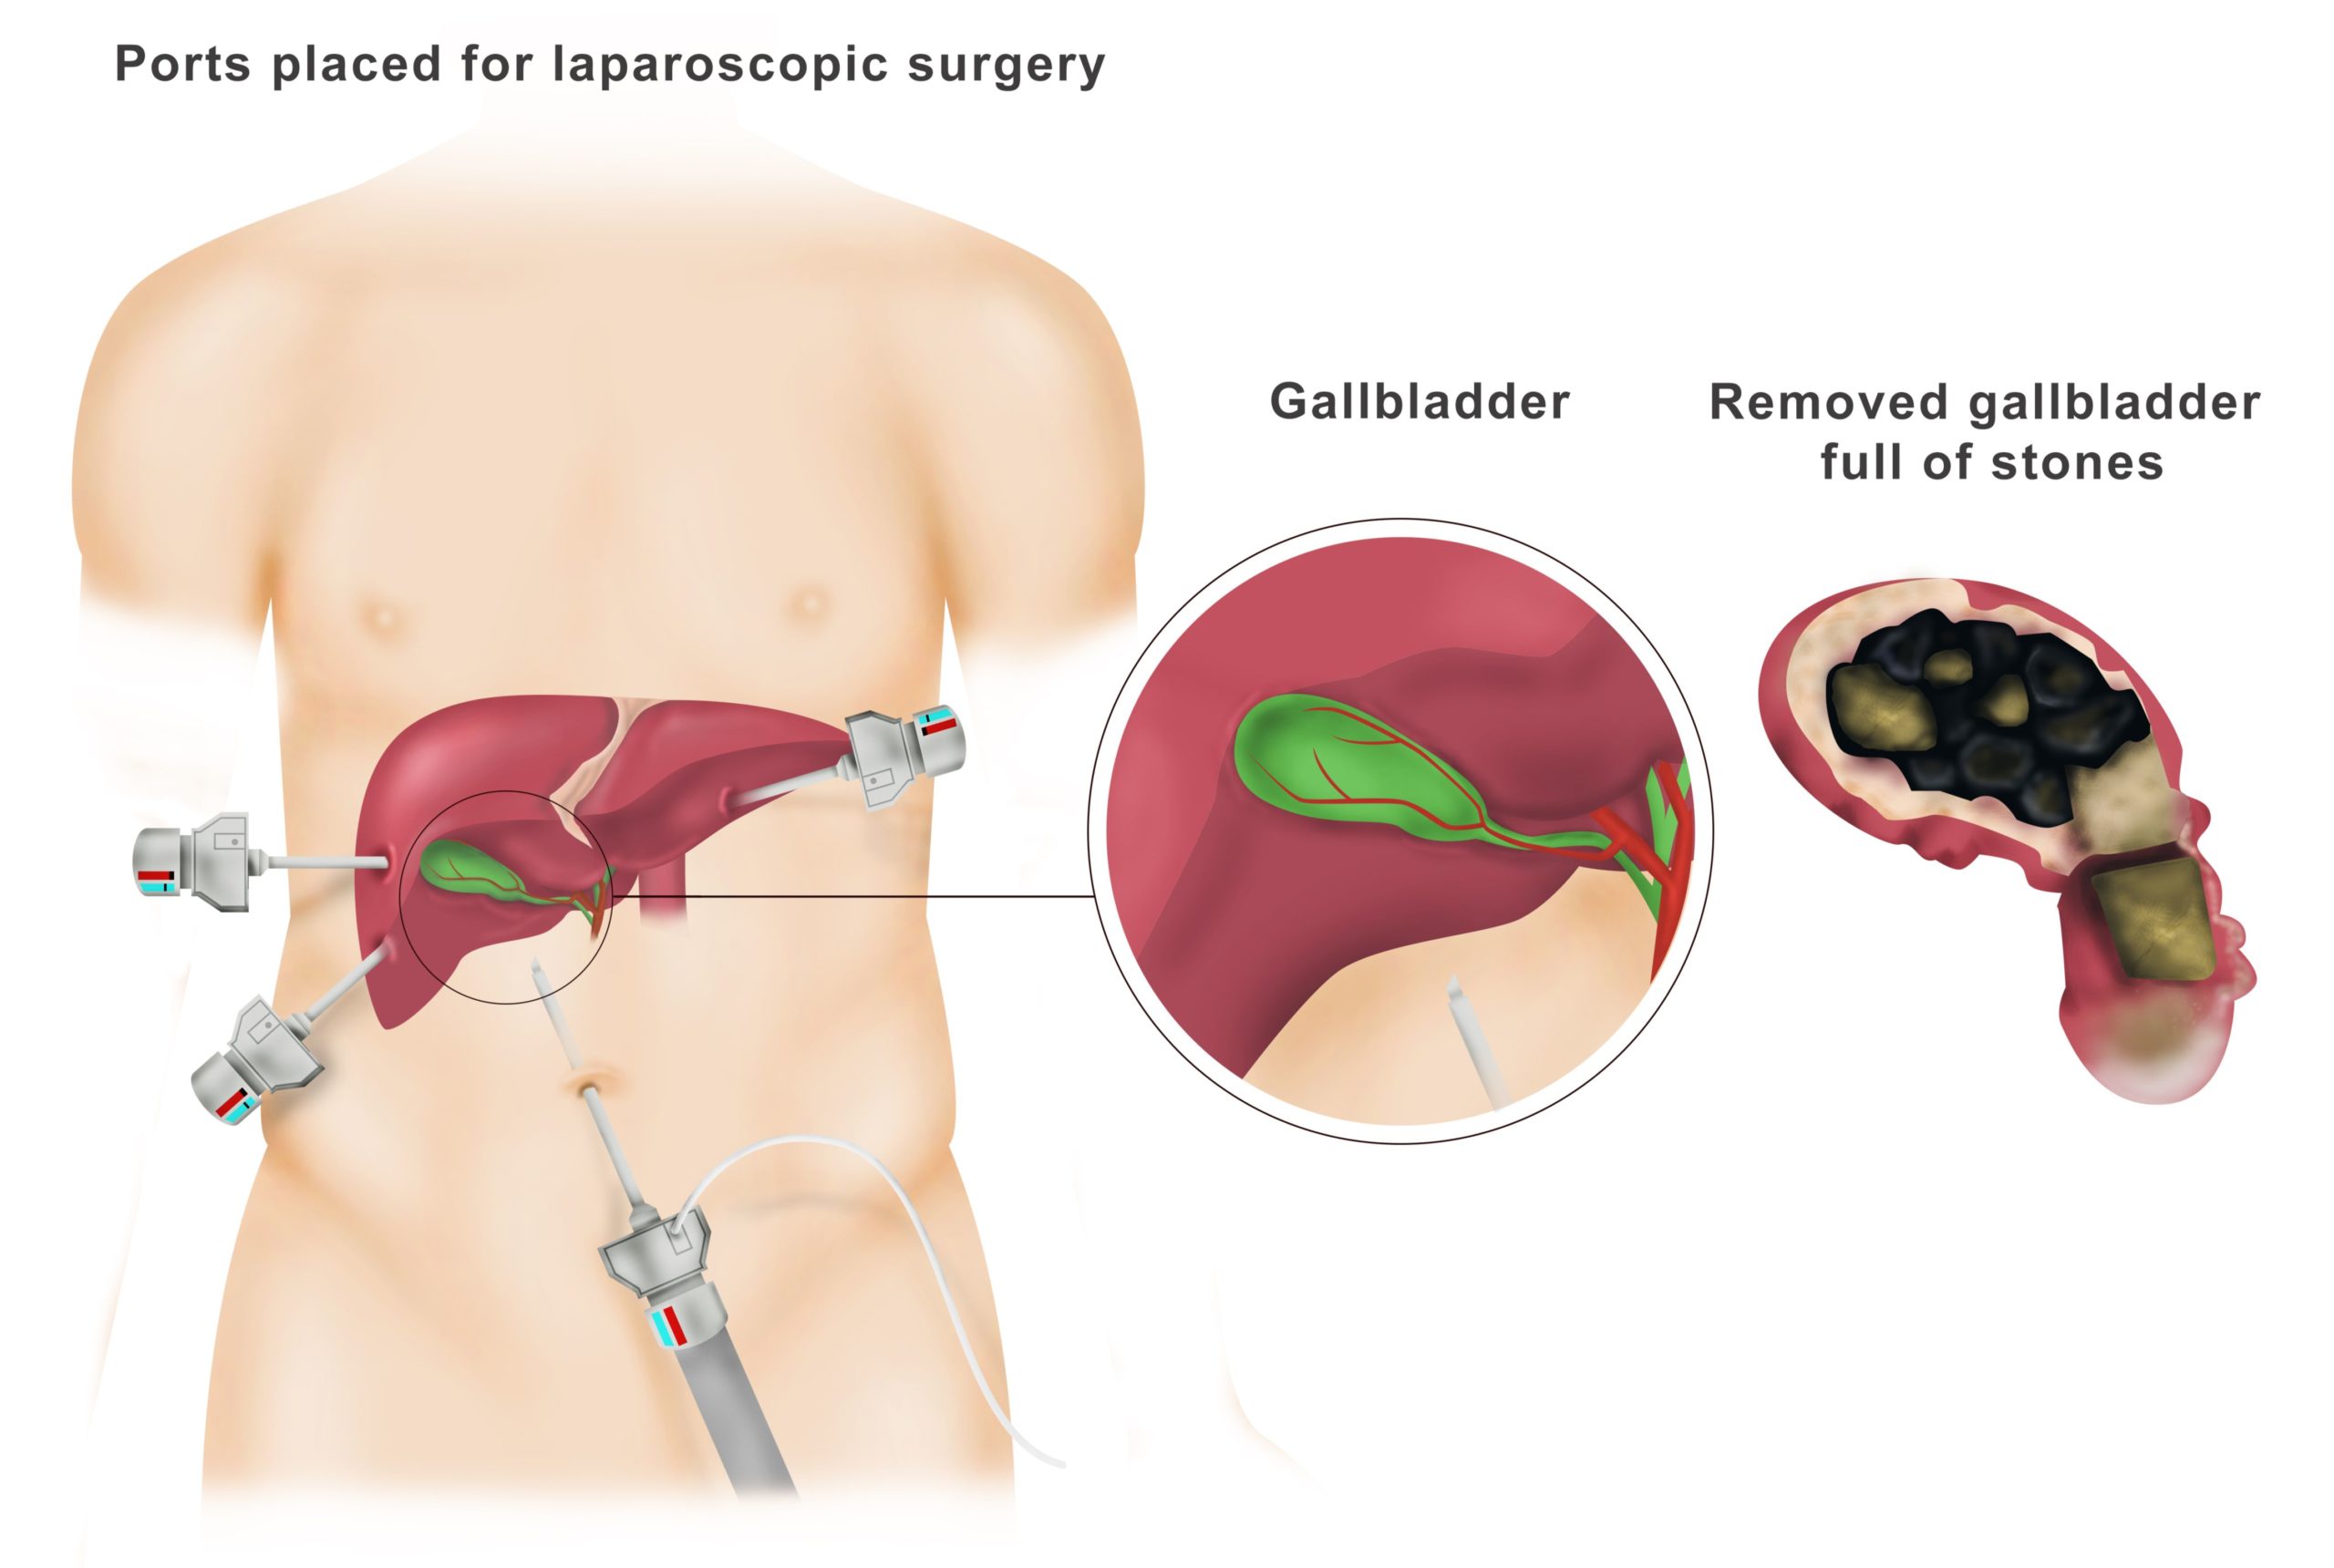 Open And Laparoscopic Gall Bladder Surgery Dr Ahmed Farah Abdulrahman